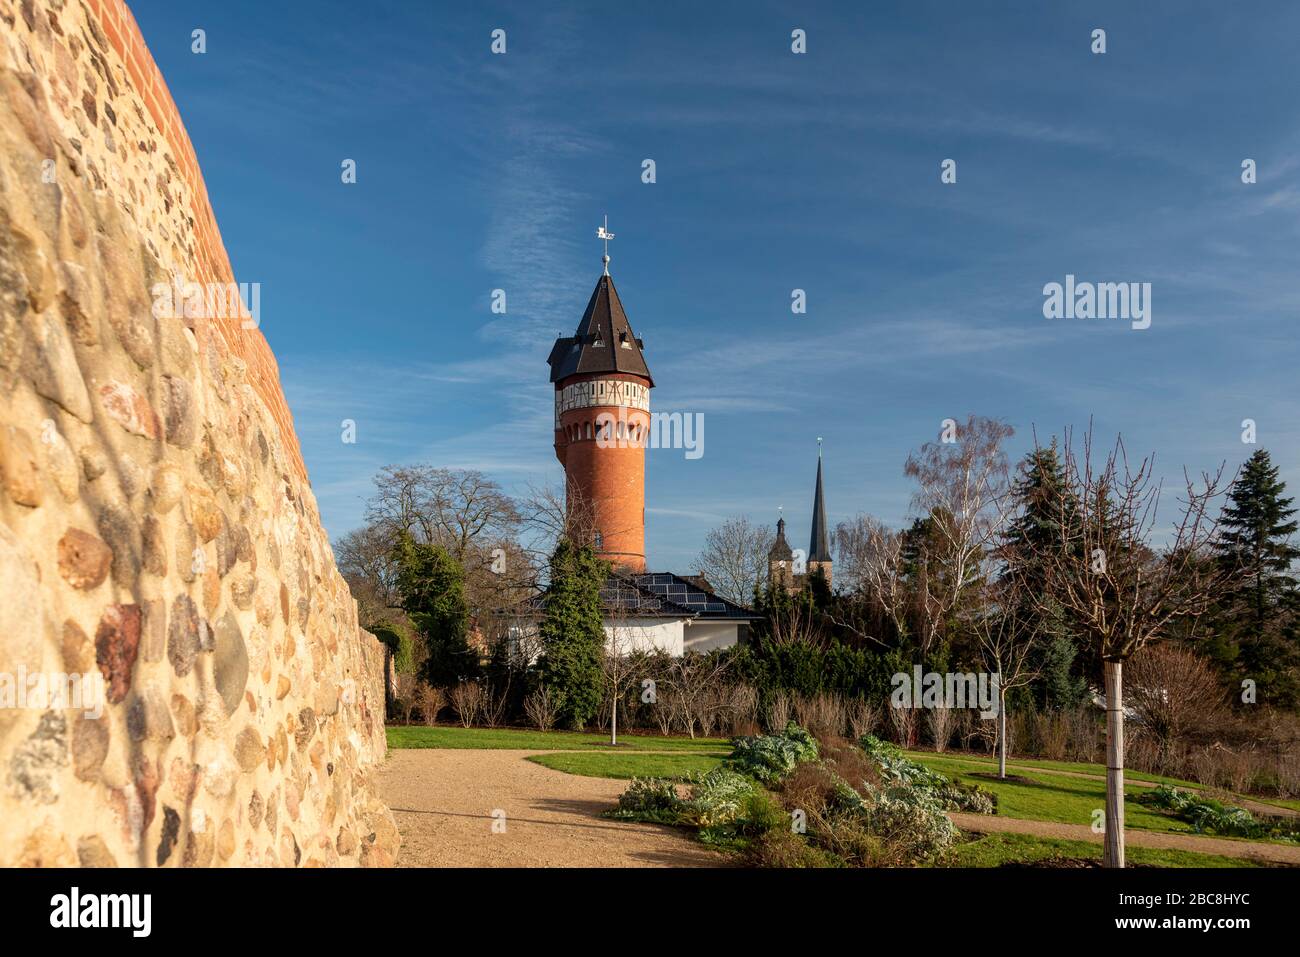 Germania, Sassonia-Anhalt, castello, vigneto con torre d'acqua Foto Stock